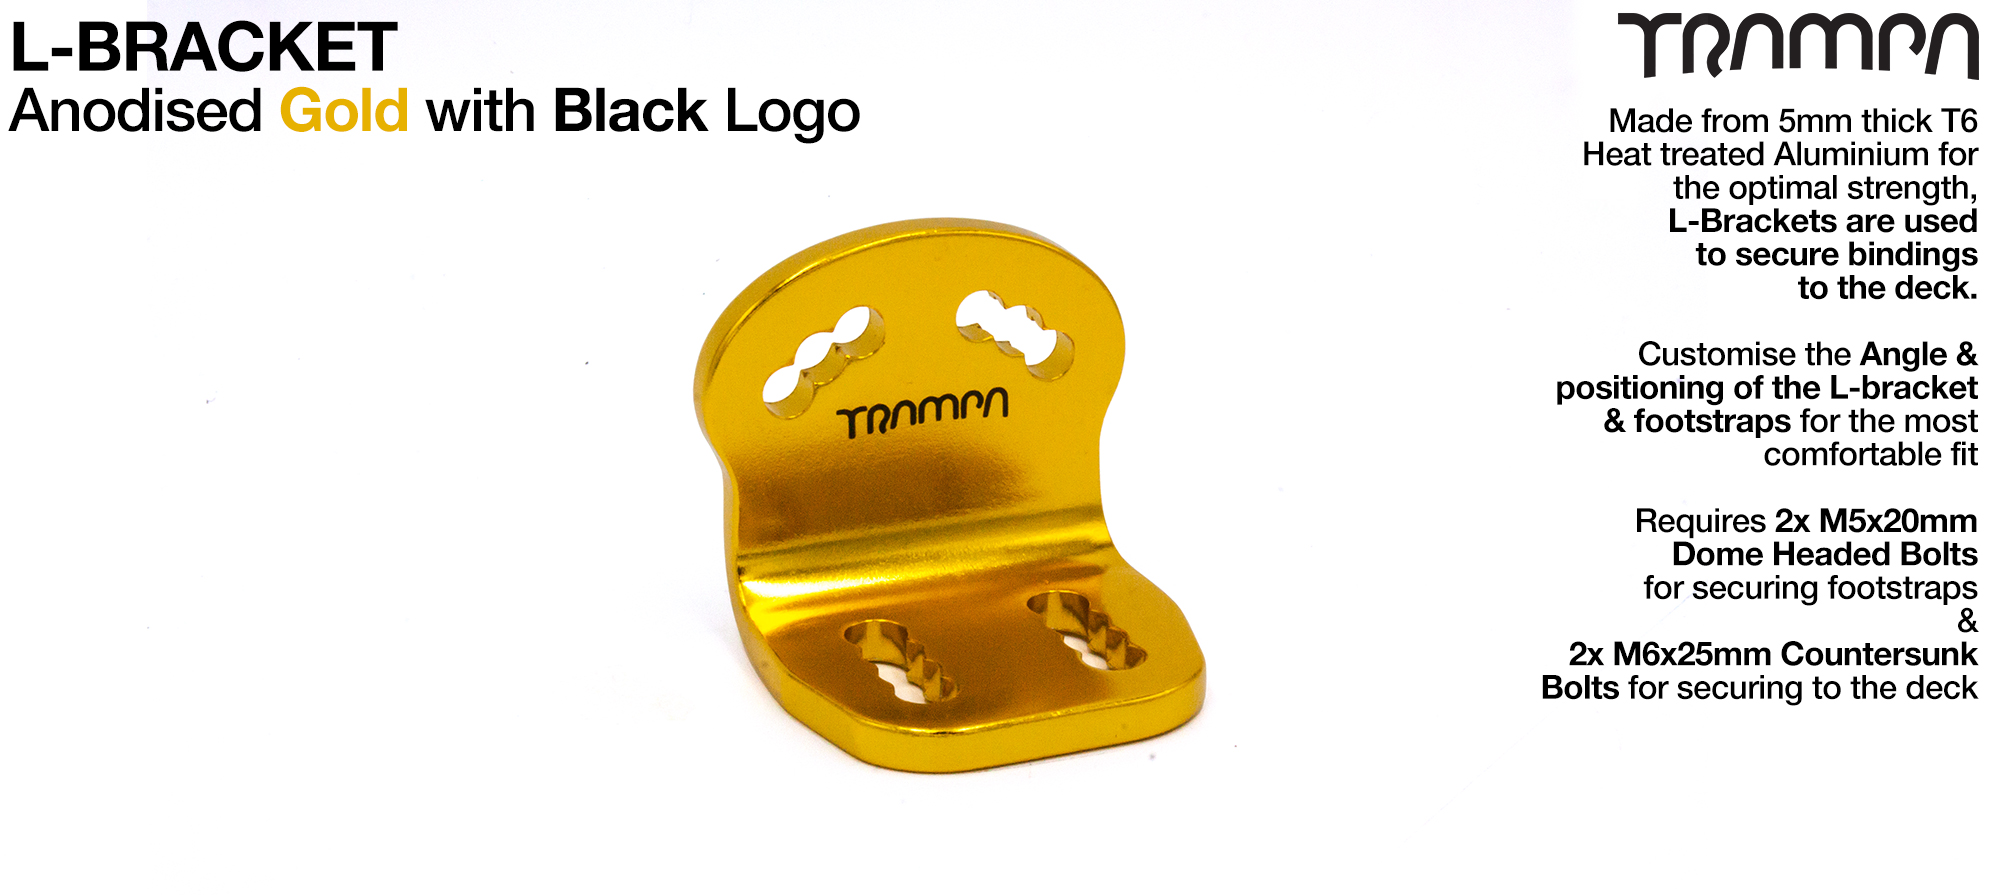 L Bracket - Anodised GOLD with BLACK logo